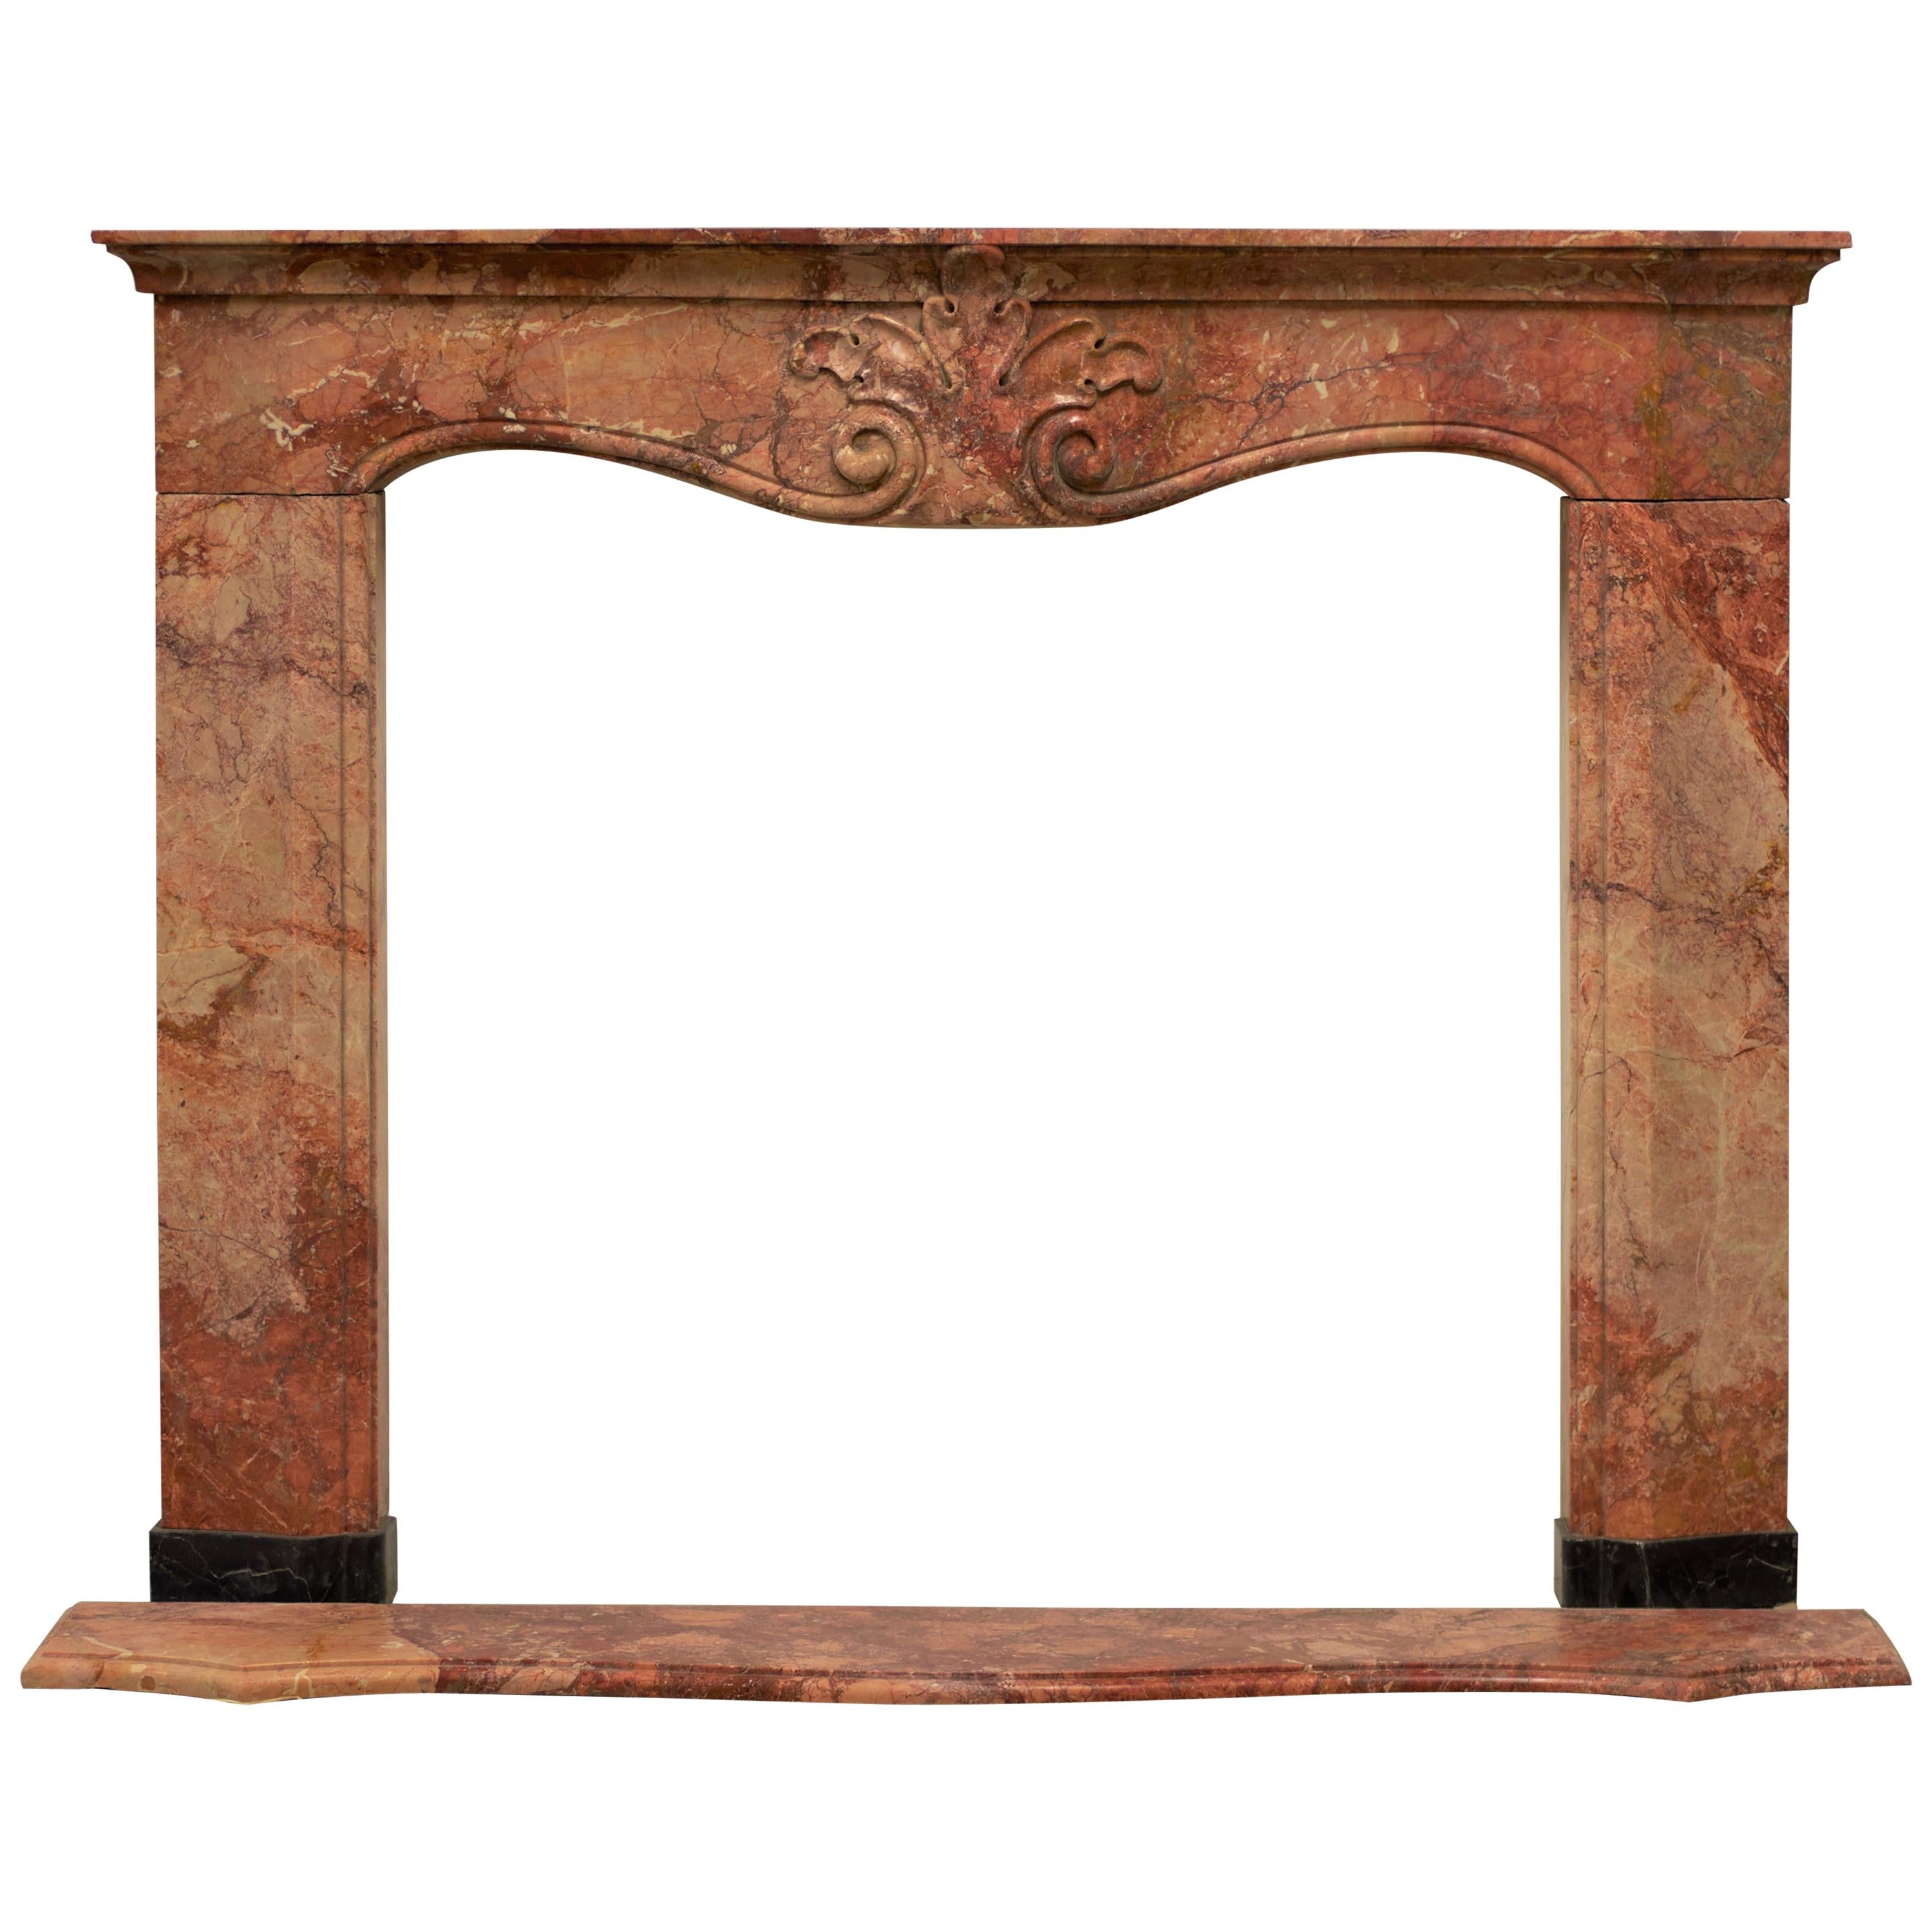 Lovely Italian Fireplace Mantel For Sale